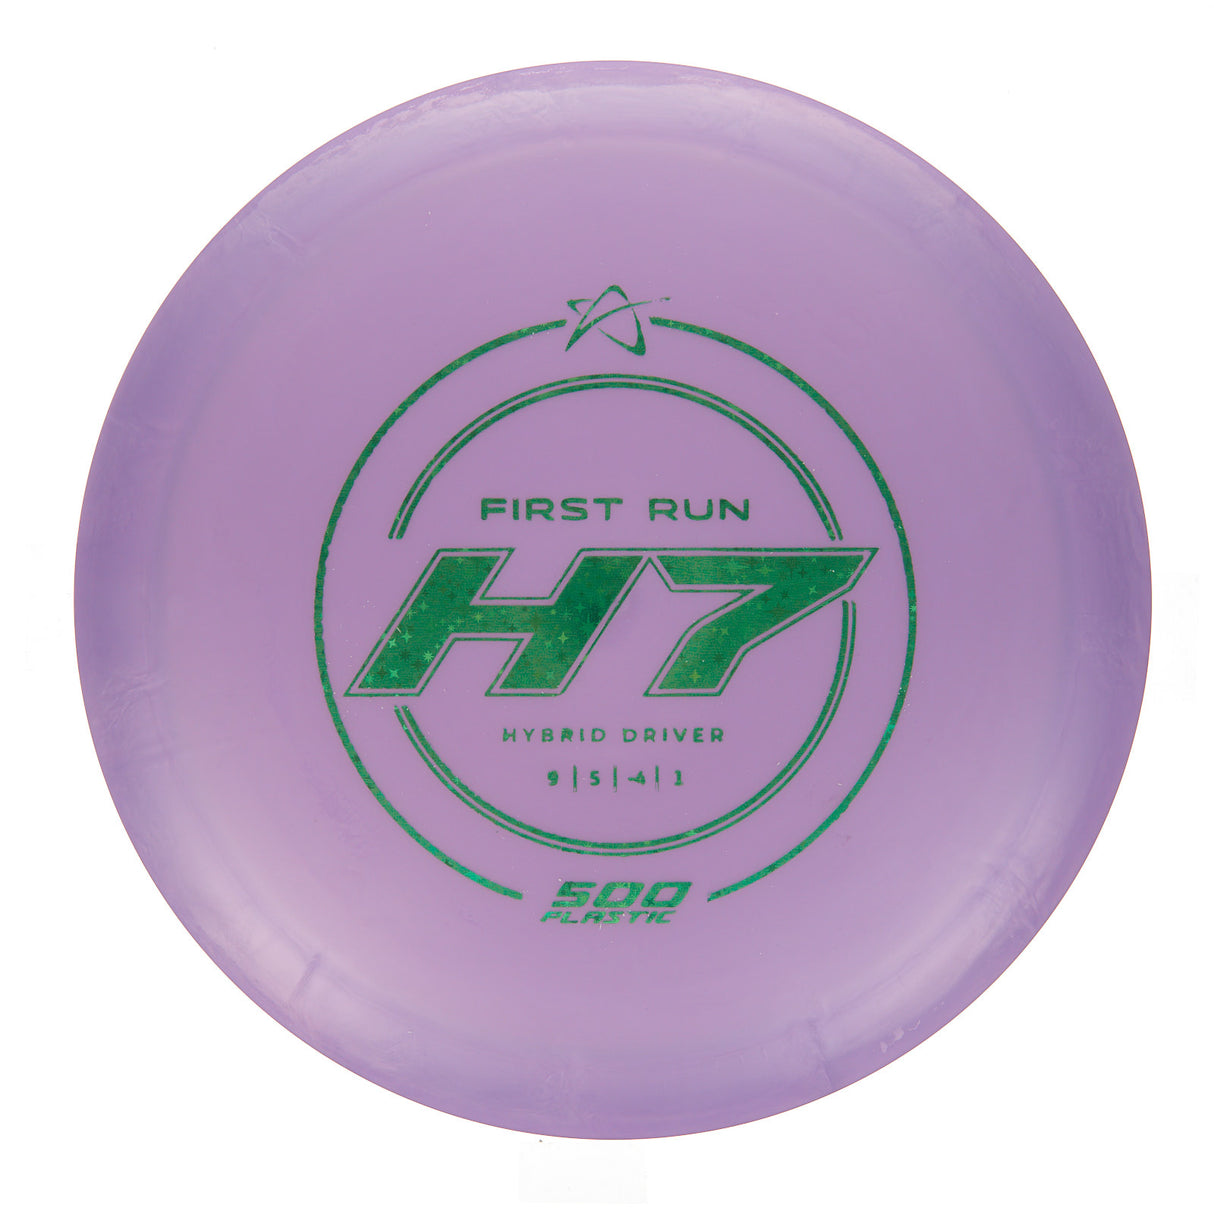 Prodigy H7 - First Run 500 175g | Style 0001